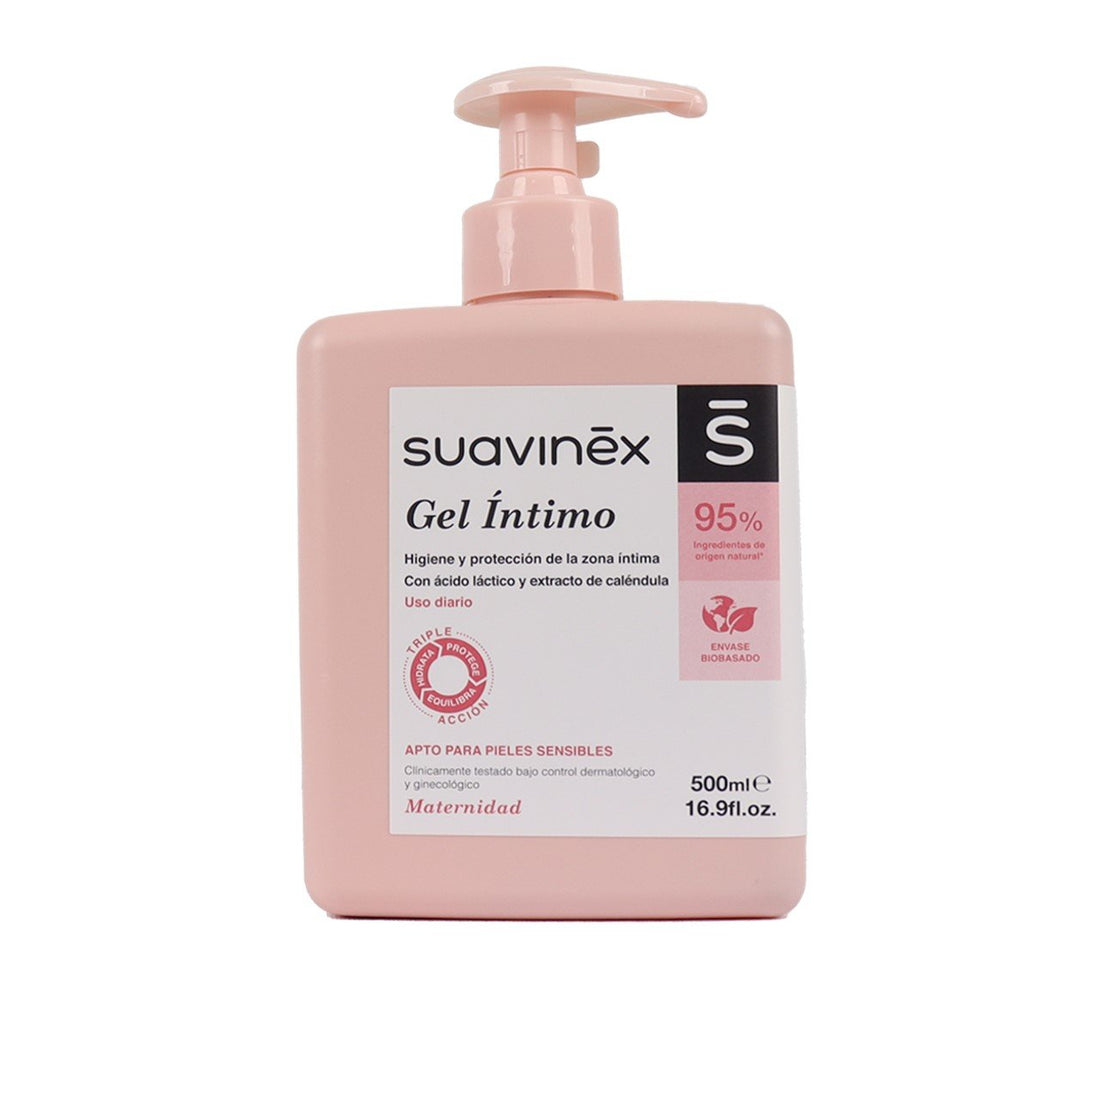 Suavinex Intimate Hygiene Gel 500ml